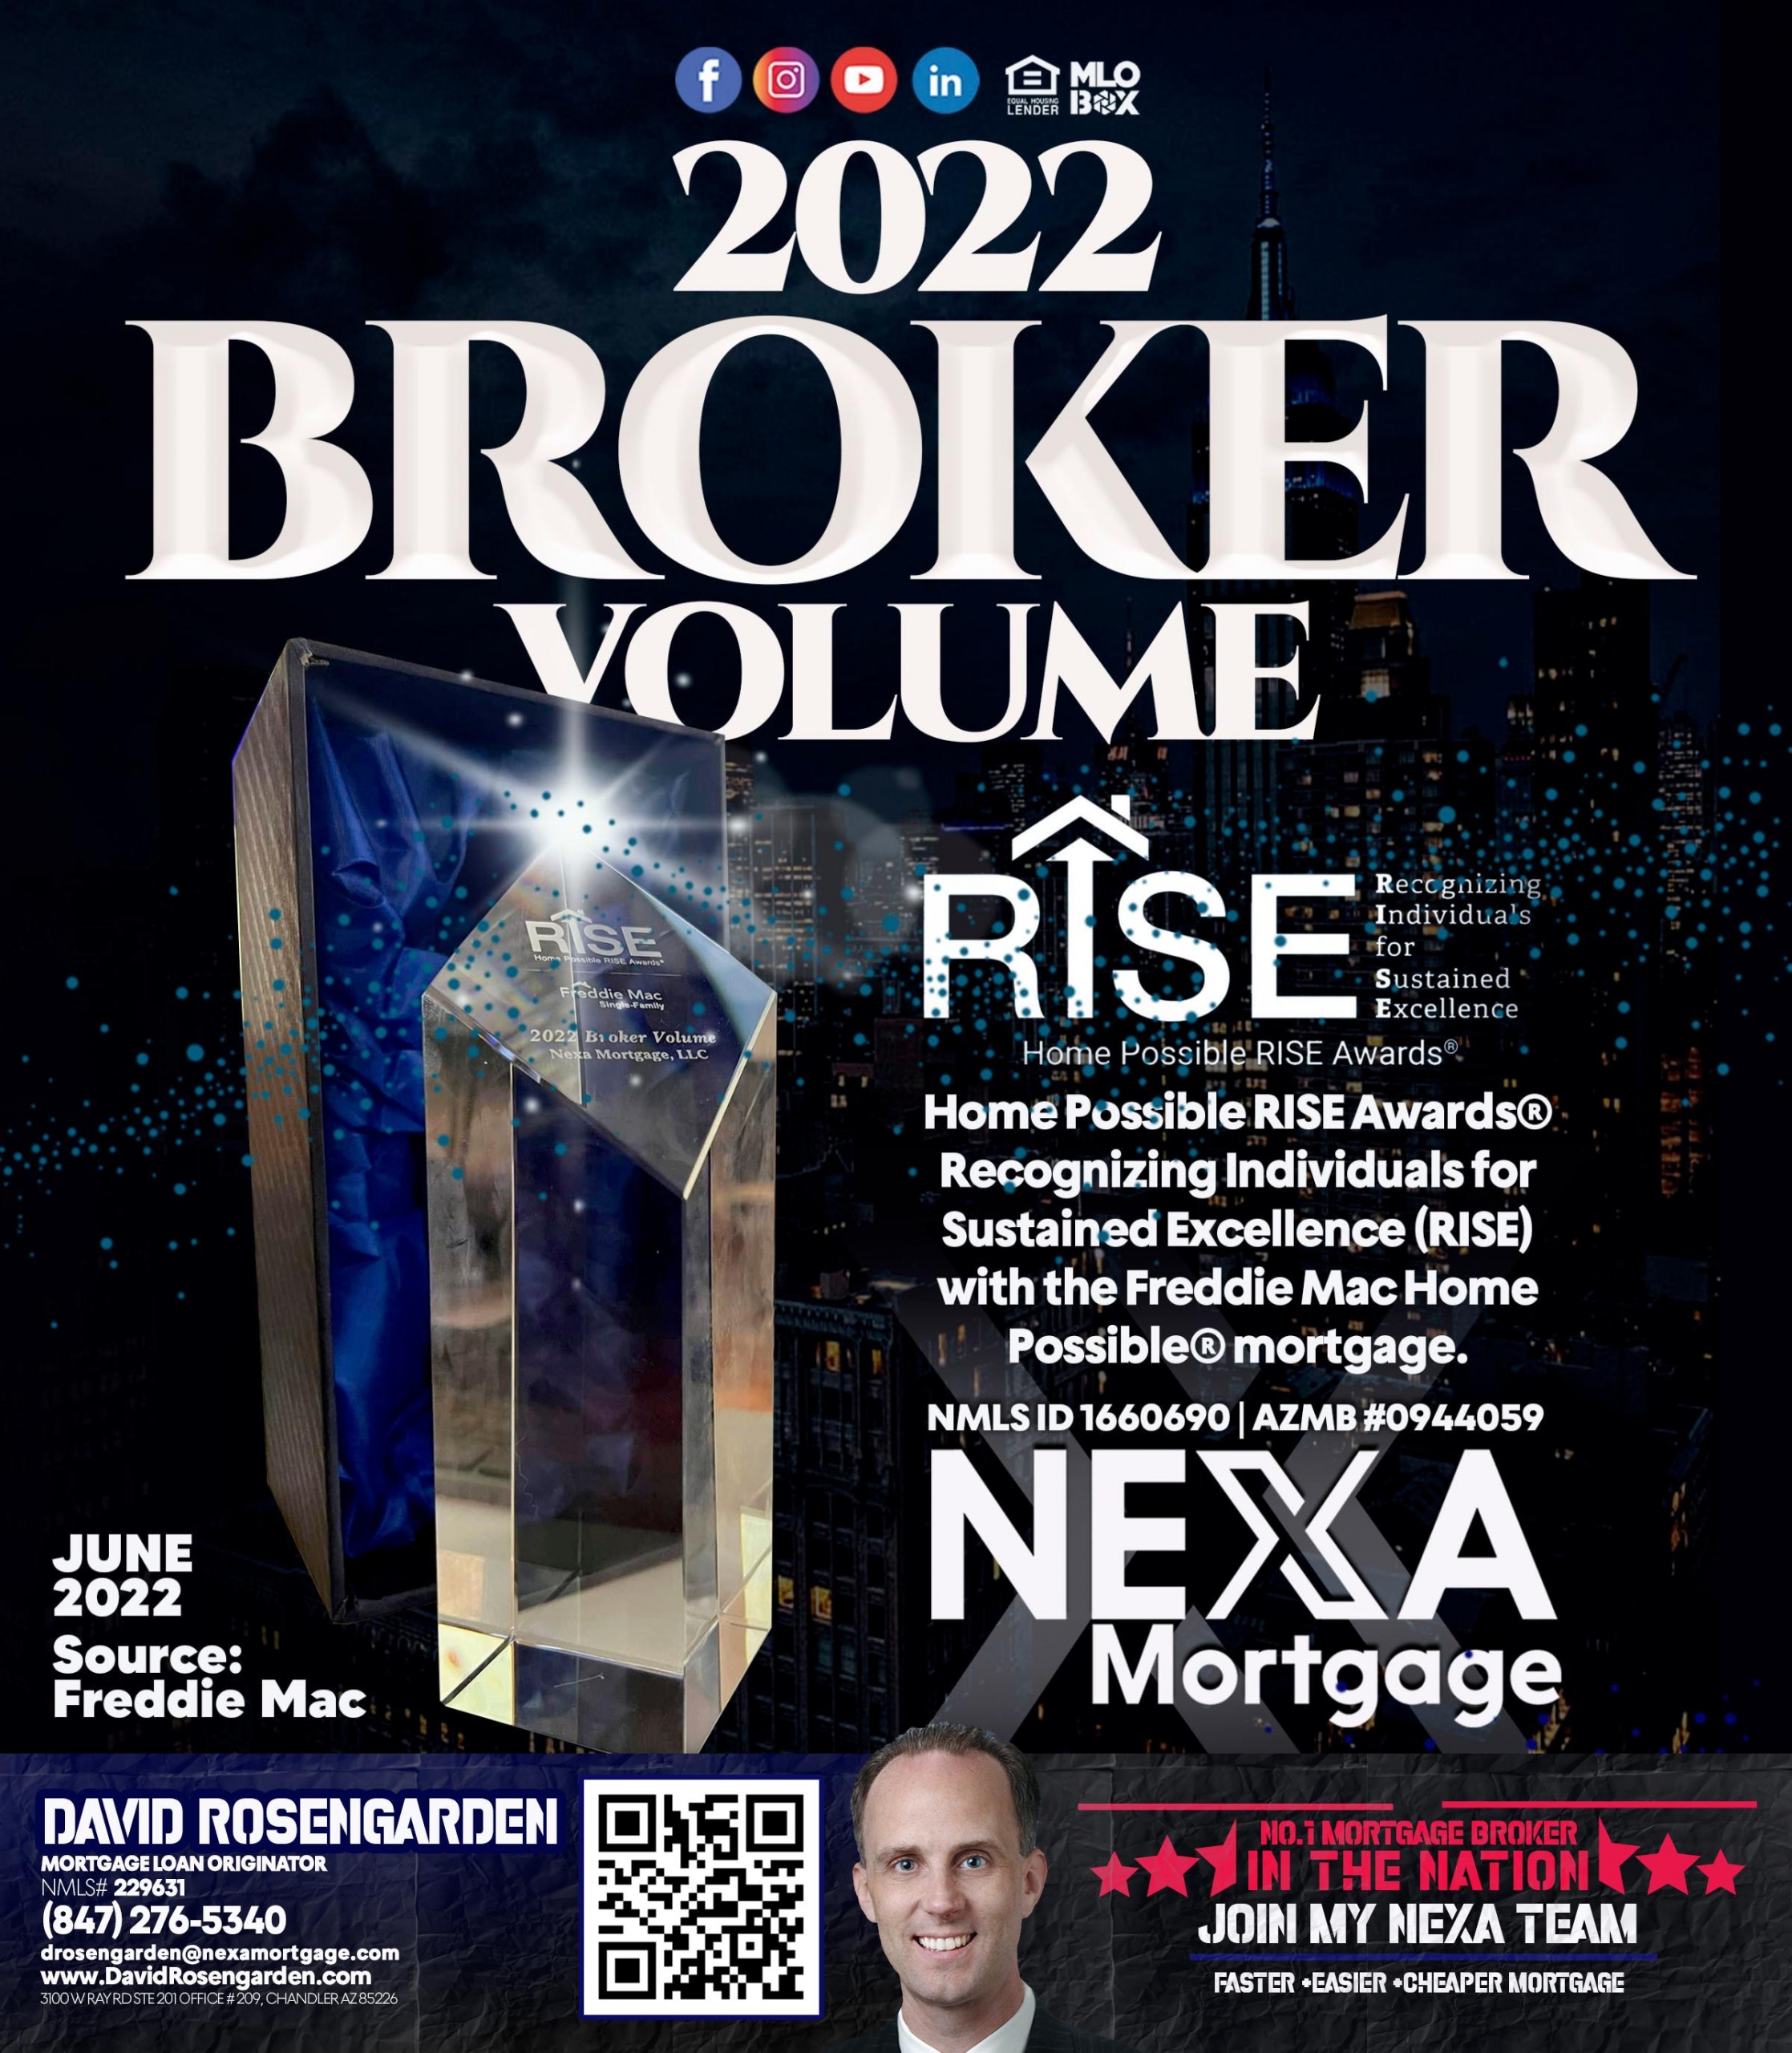 RISE AWARD 2022 BY VOLUME FOR NEXA - David Rosengarden -Mortgage Loan Originator